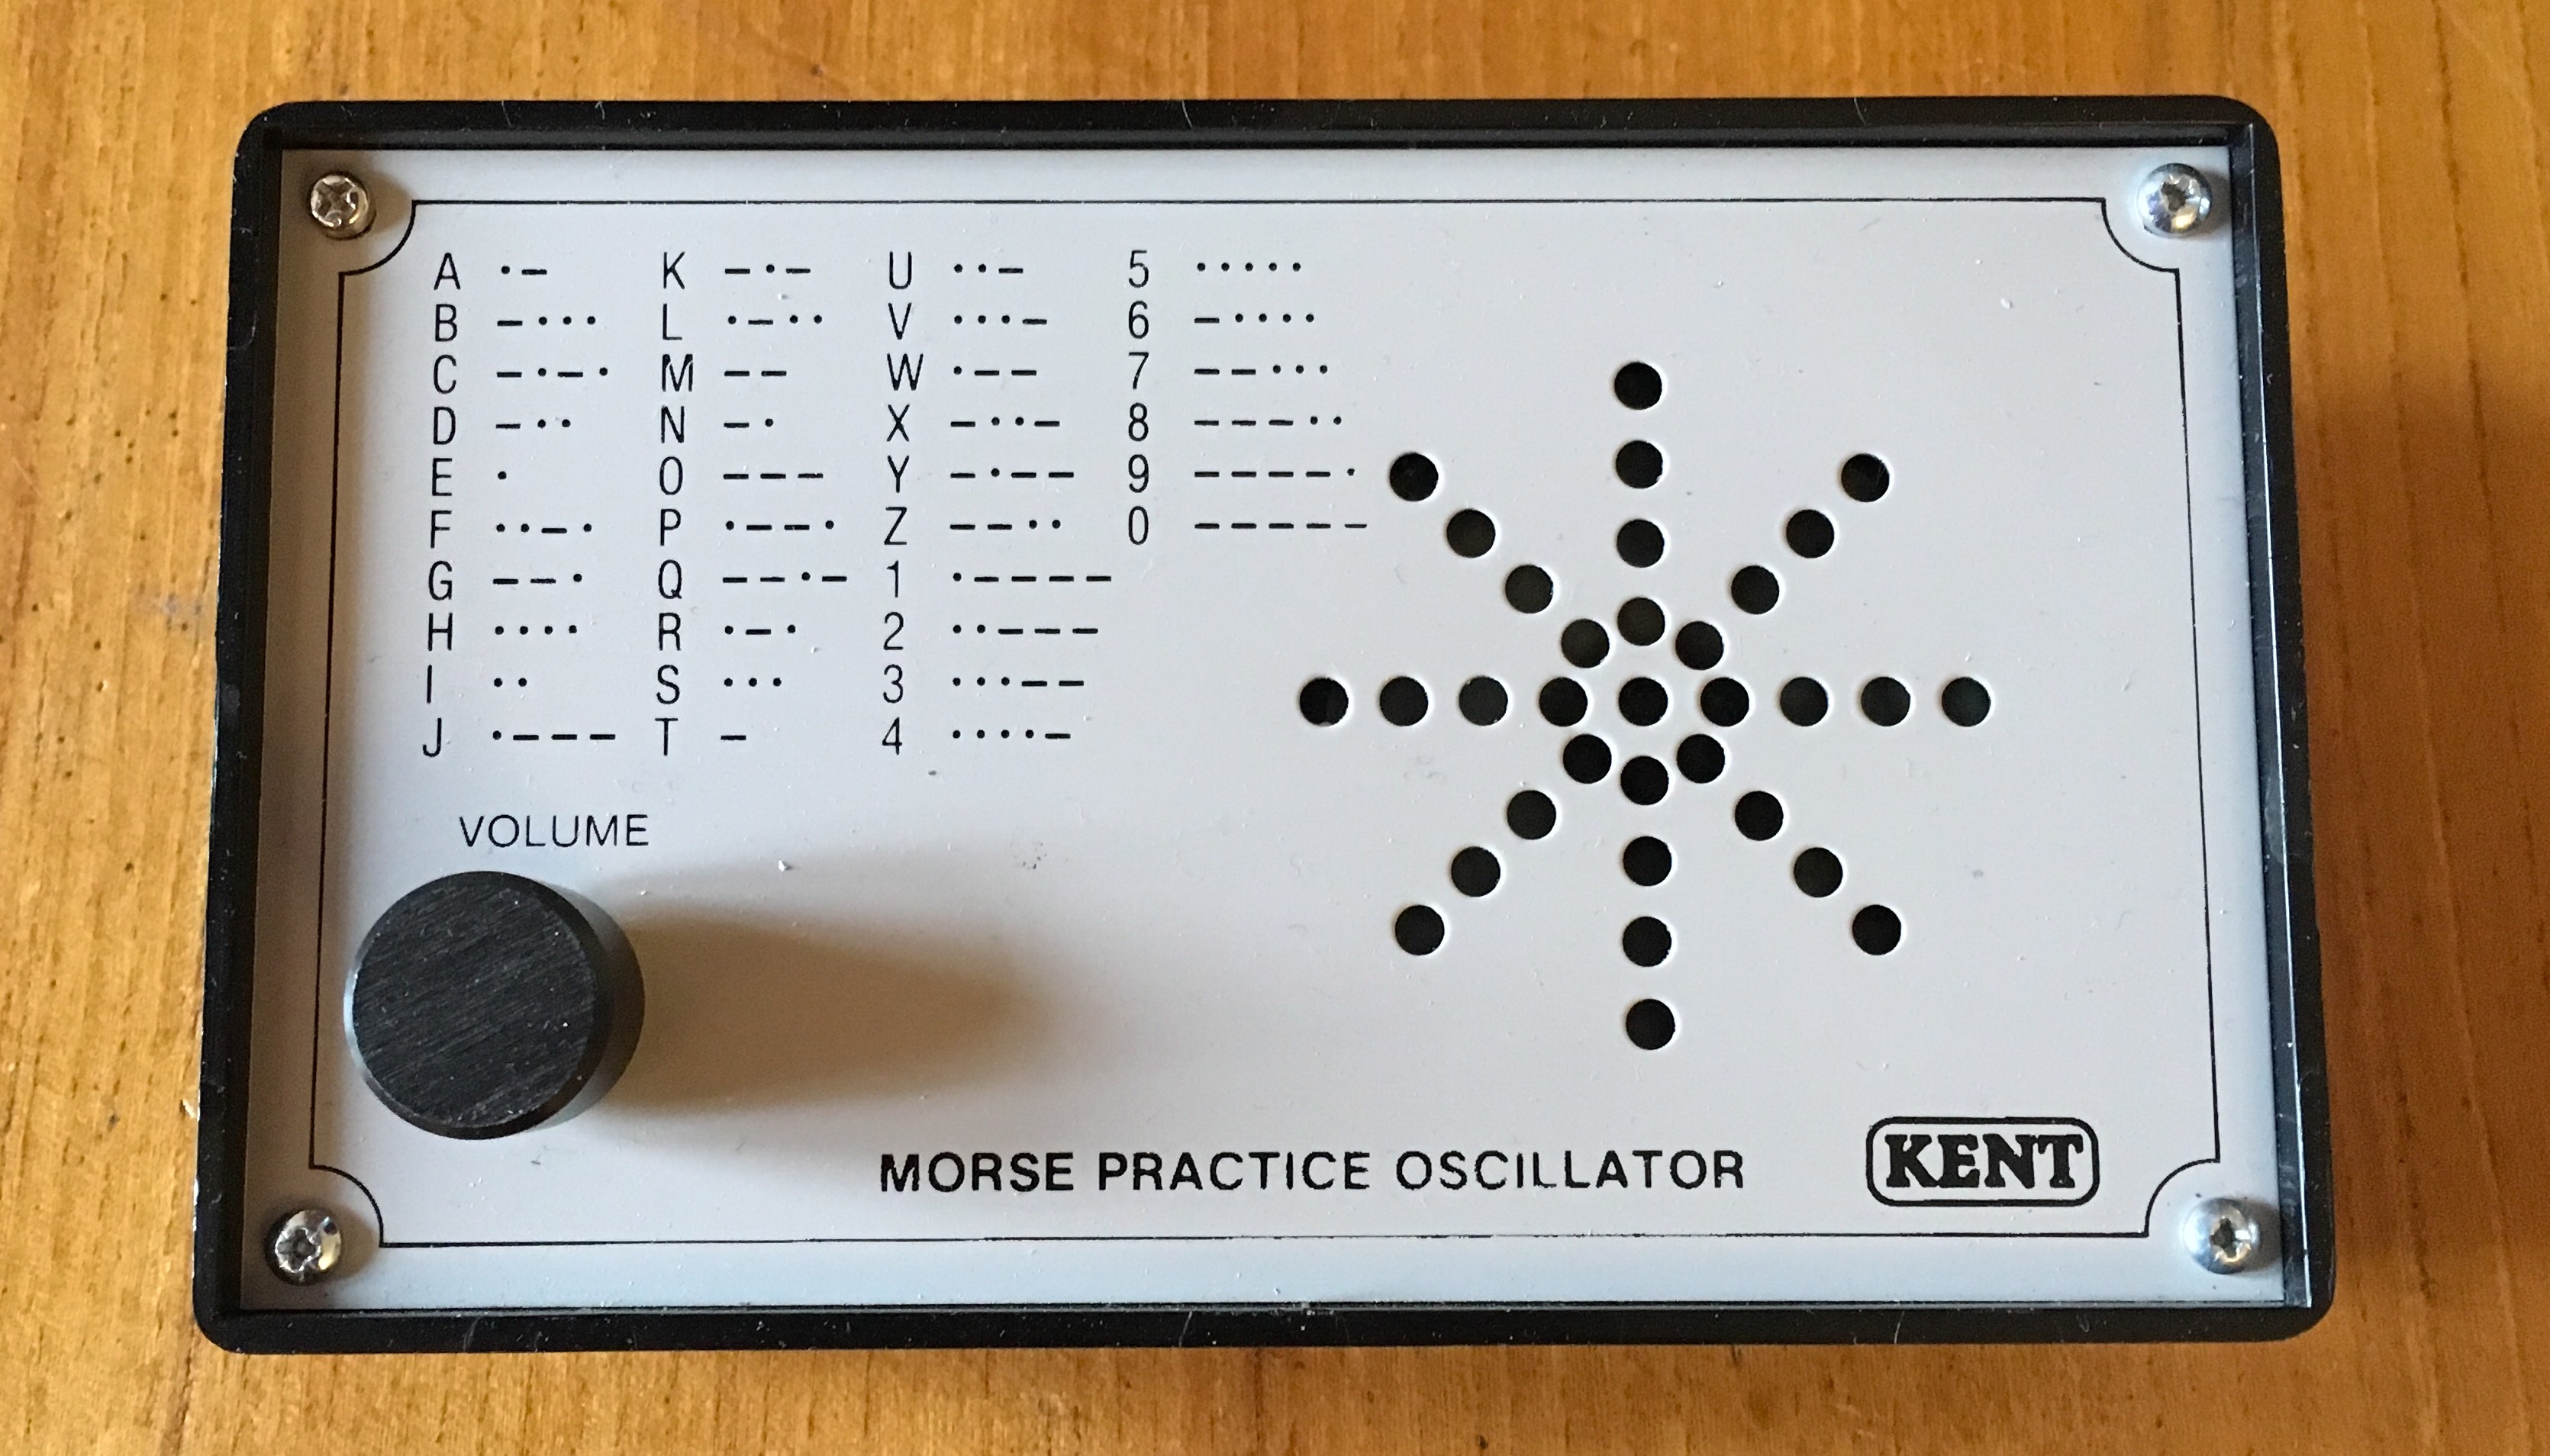 Kent practice oscillator